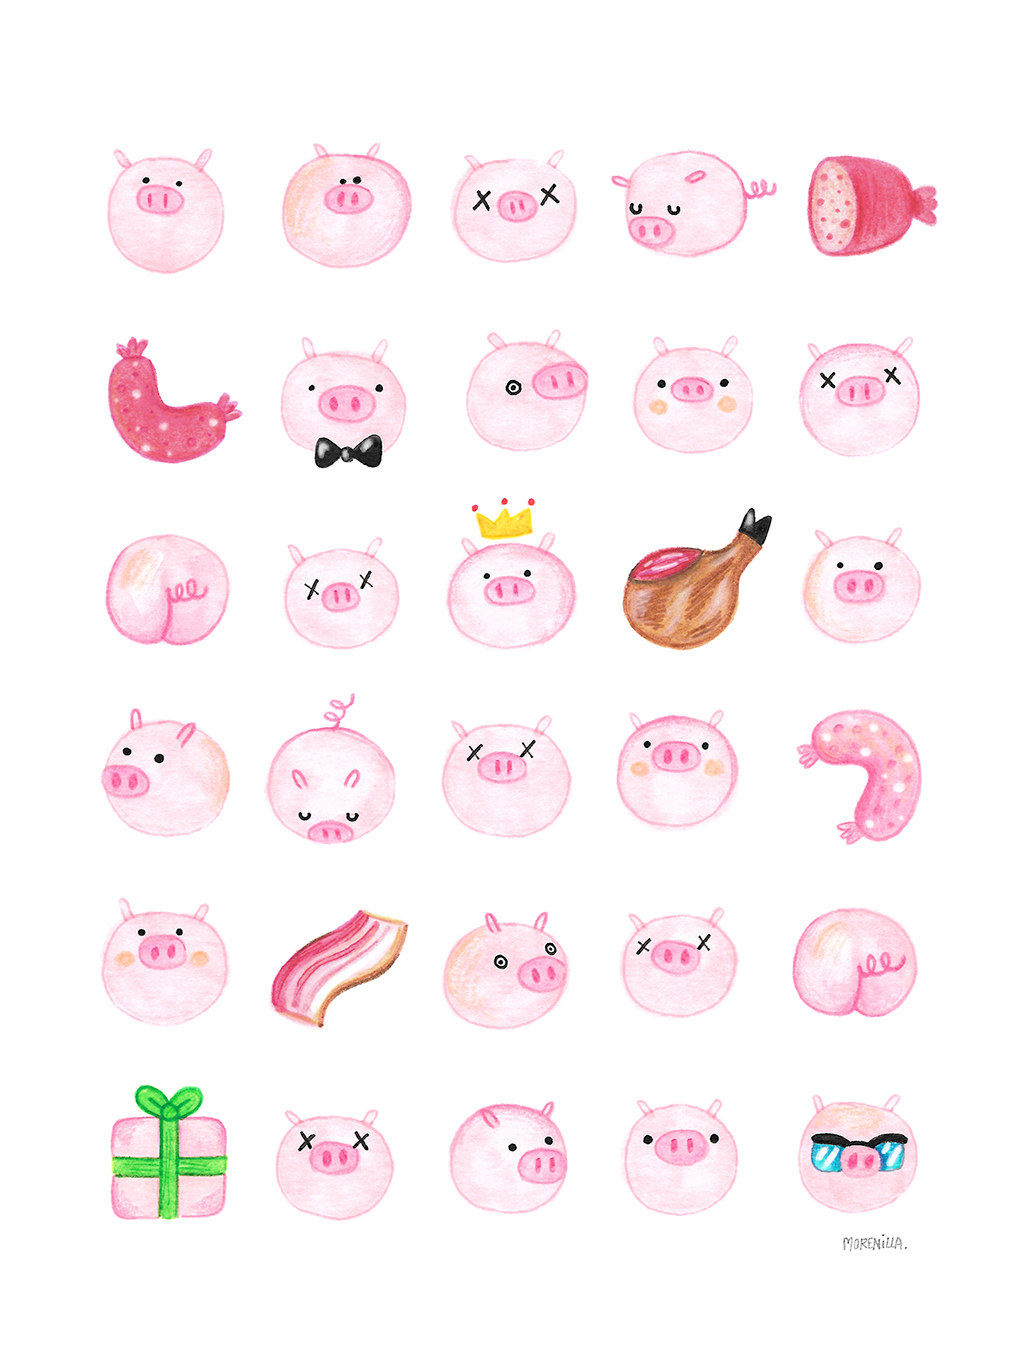 pig pigs pink 100grados 100gradosfanzine fanzine magazine bacon sausage ham